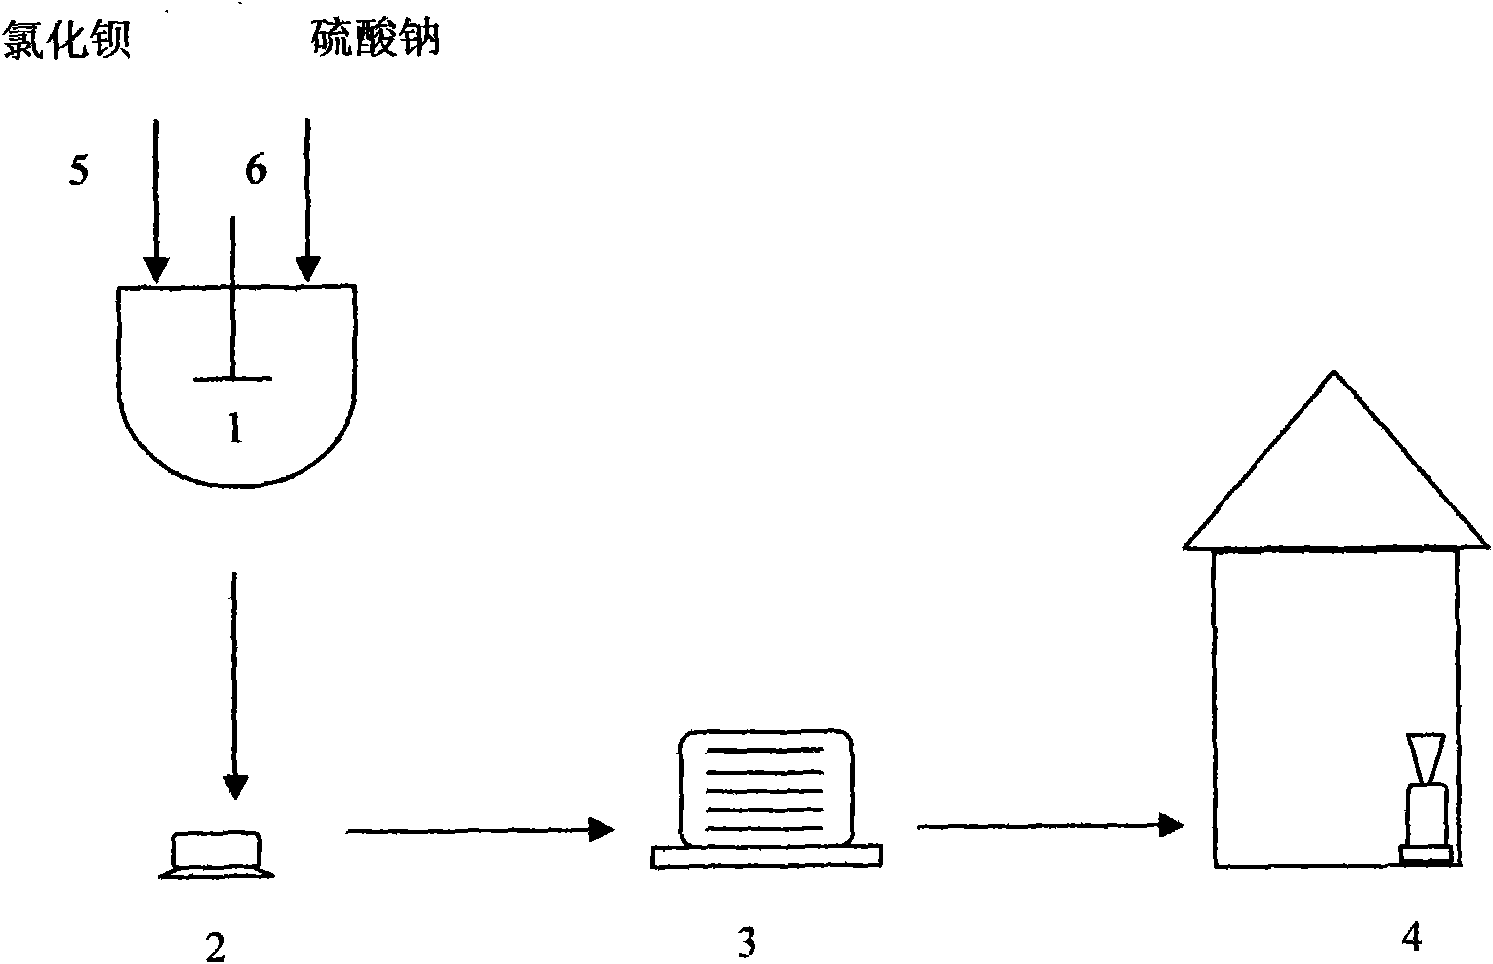 Method for preparing co-production sodium chloride of precipitated barium sulfate